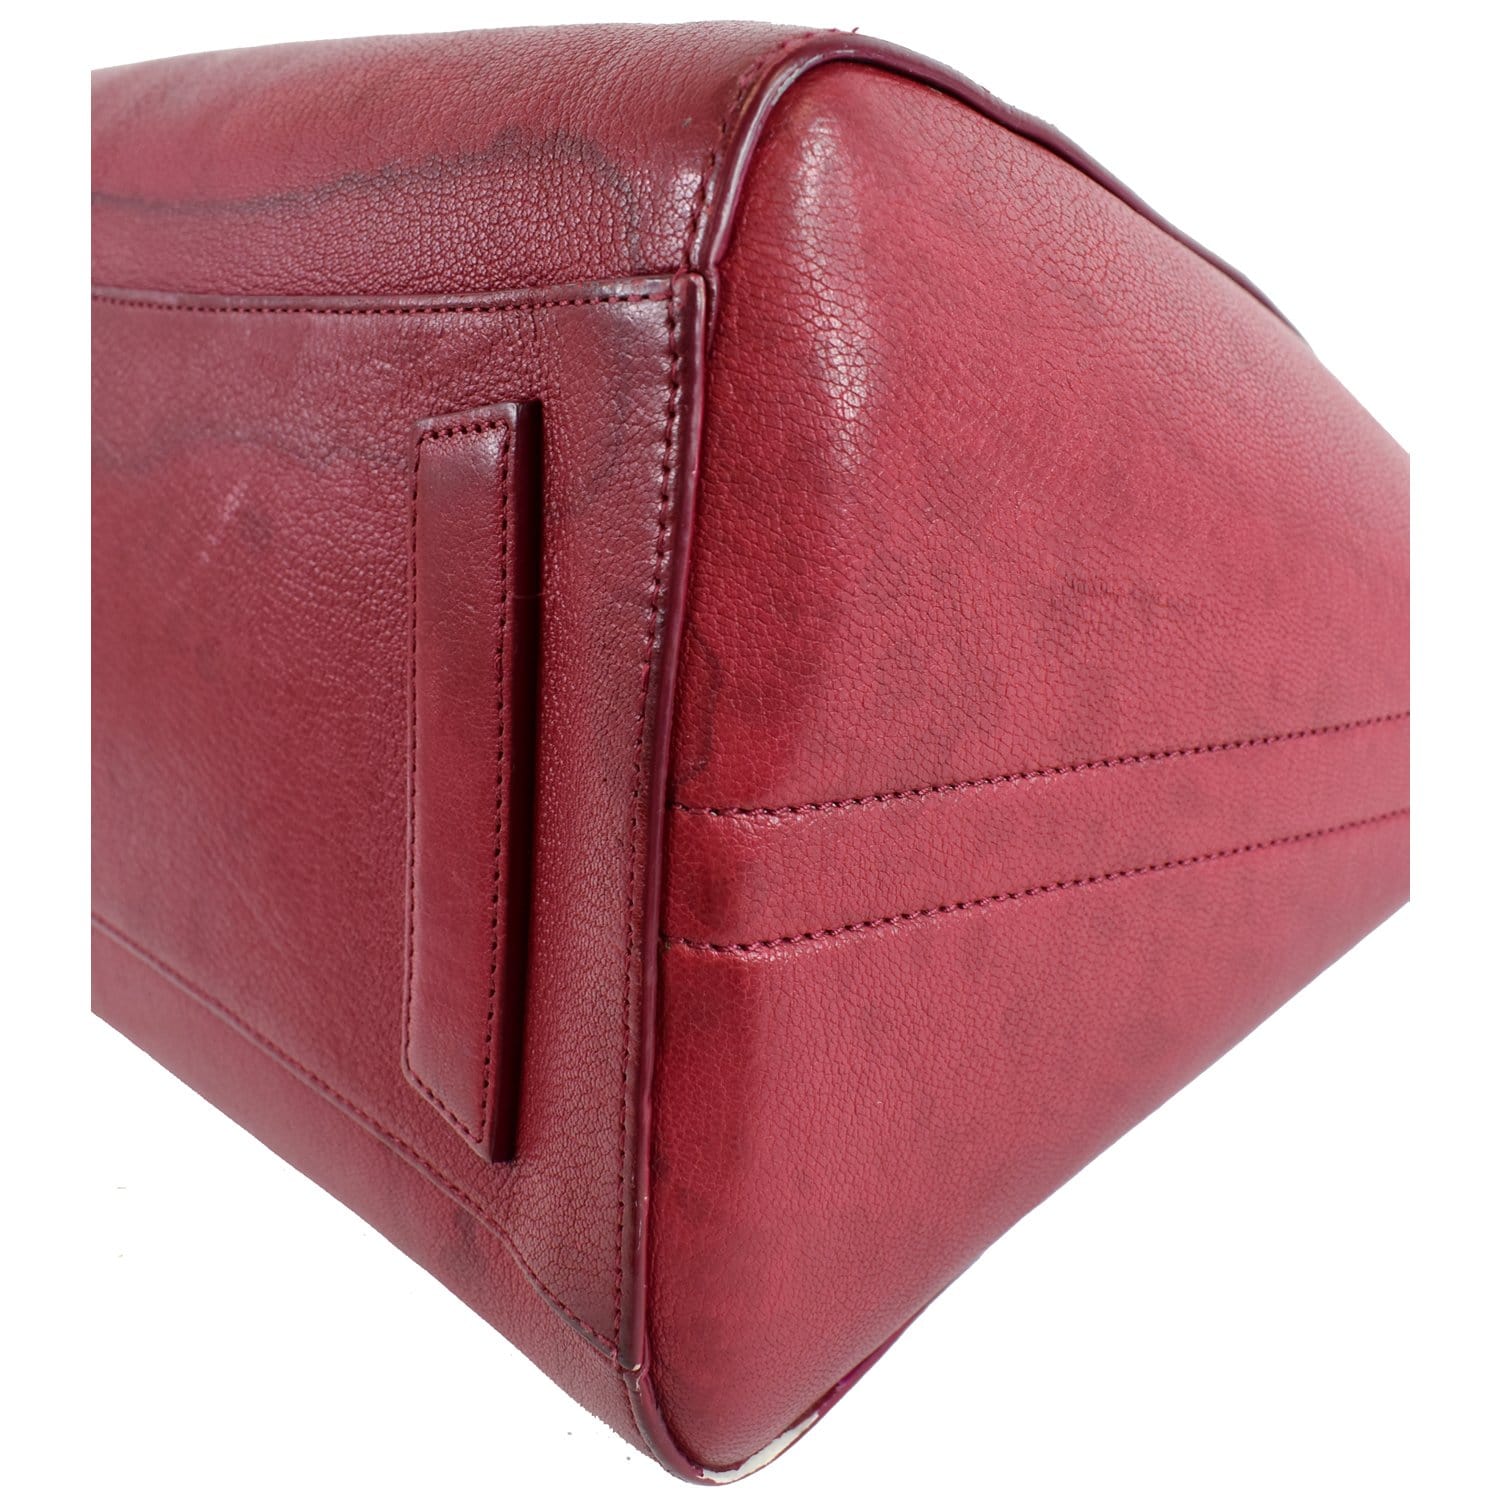 Givenchy Red Medium Antigona Envelope Clutch Bag Leather Pony